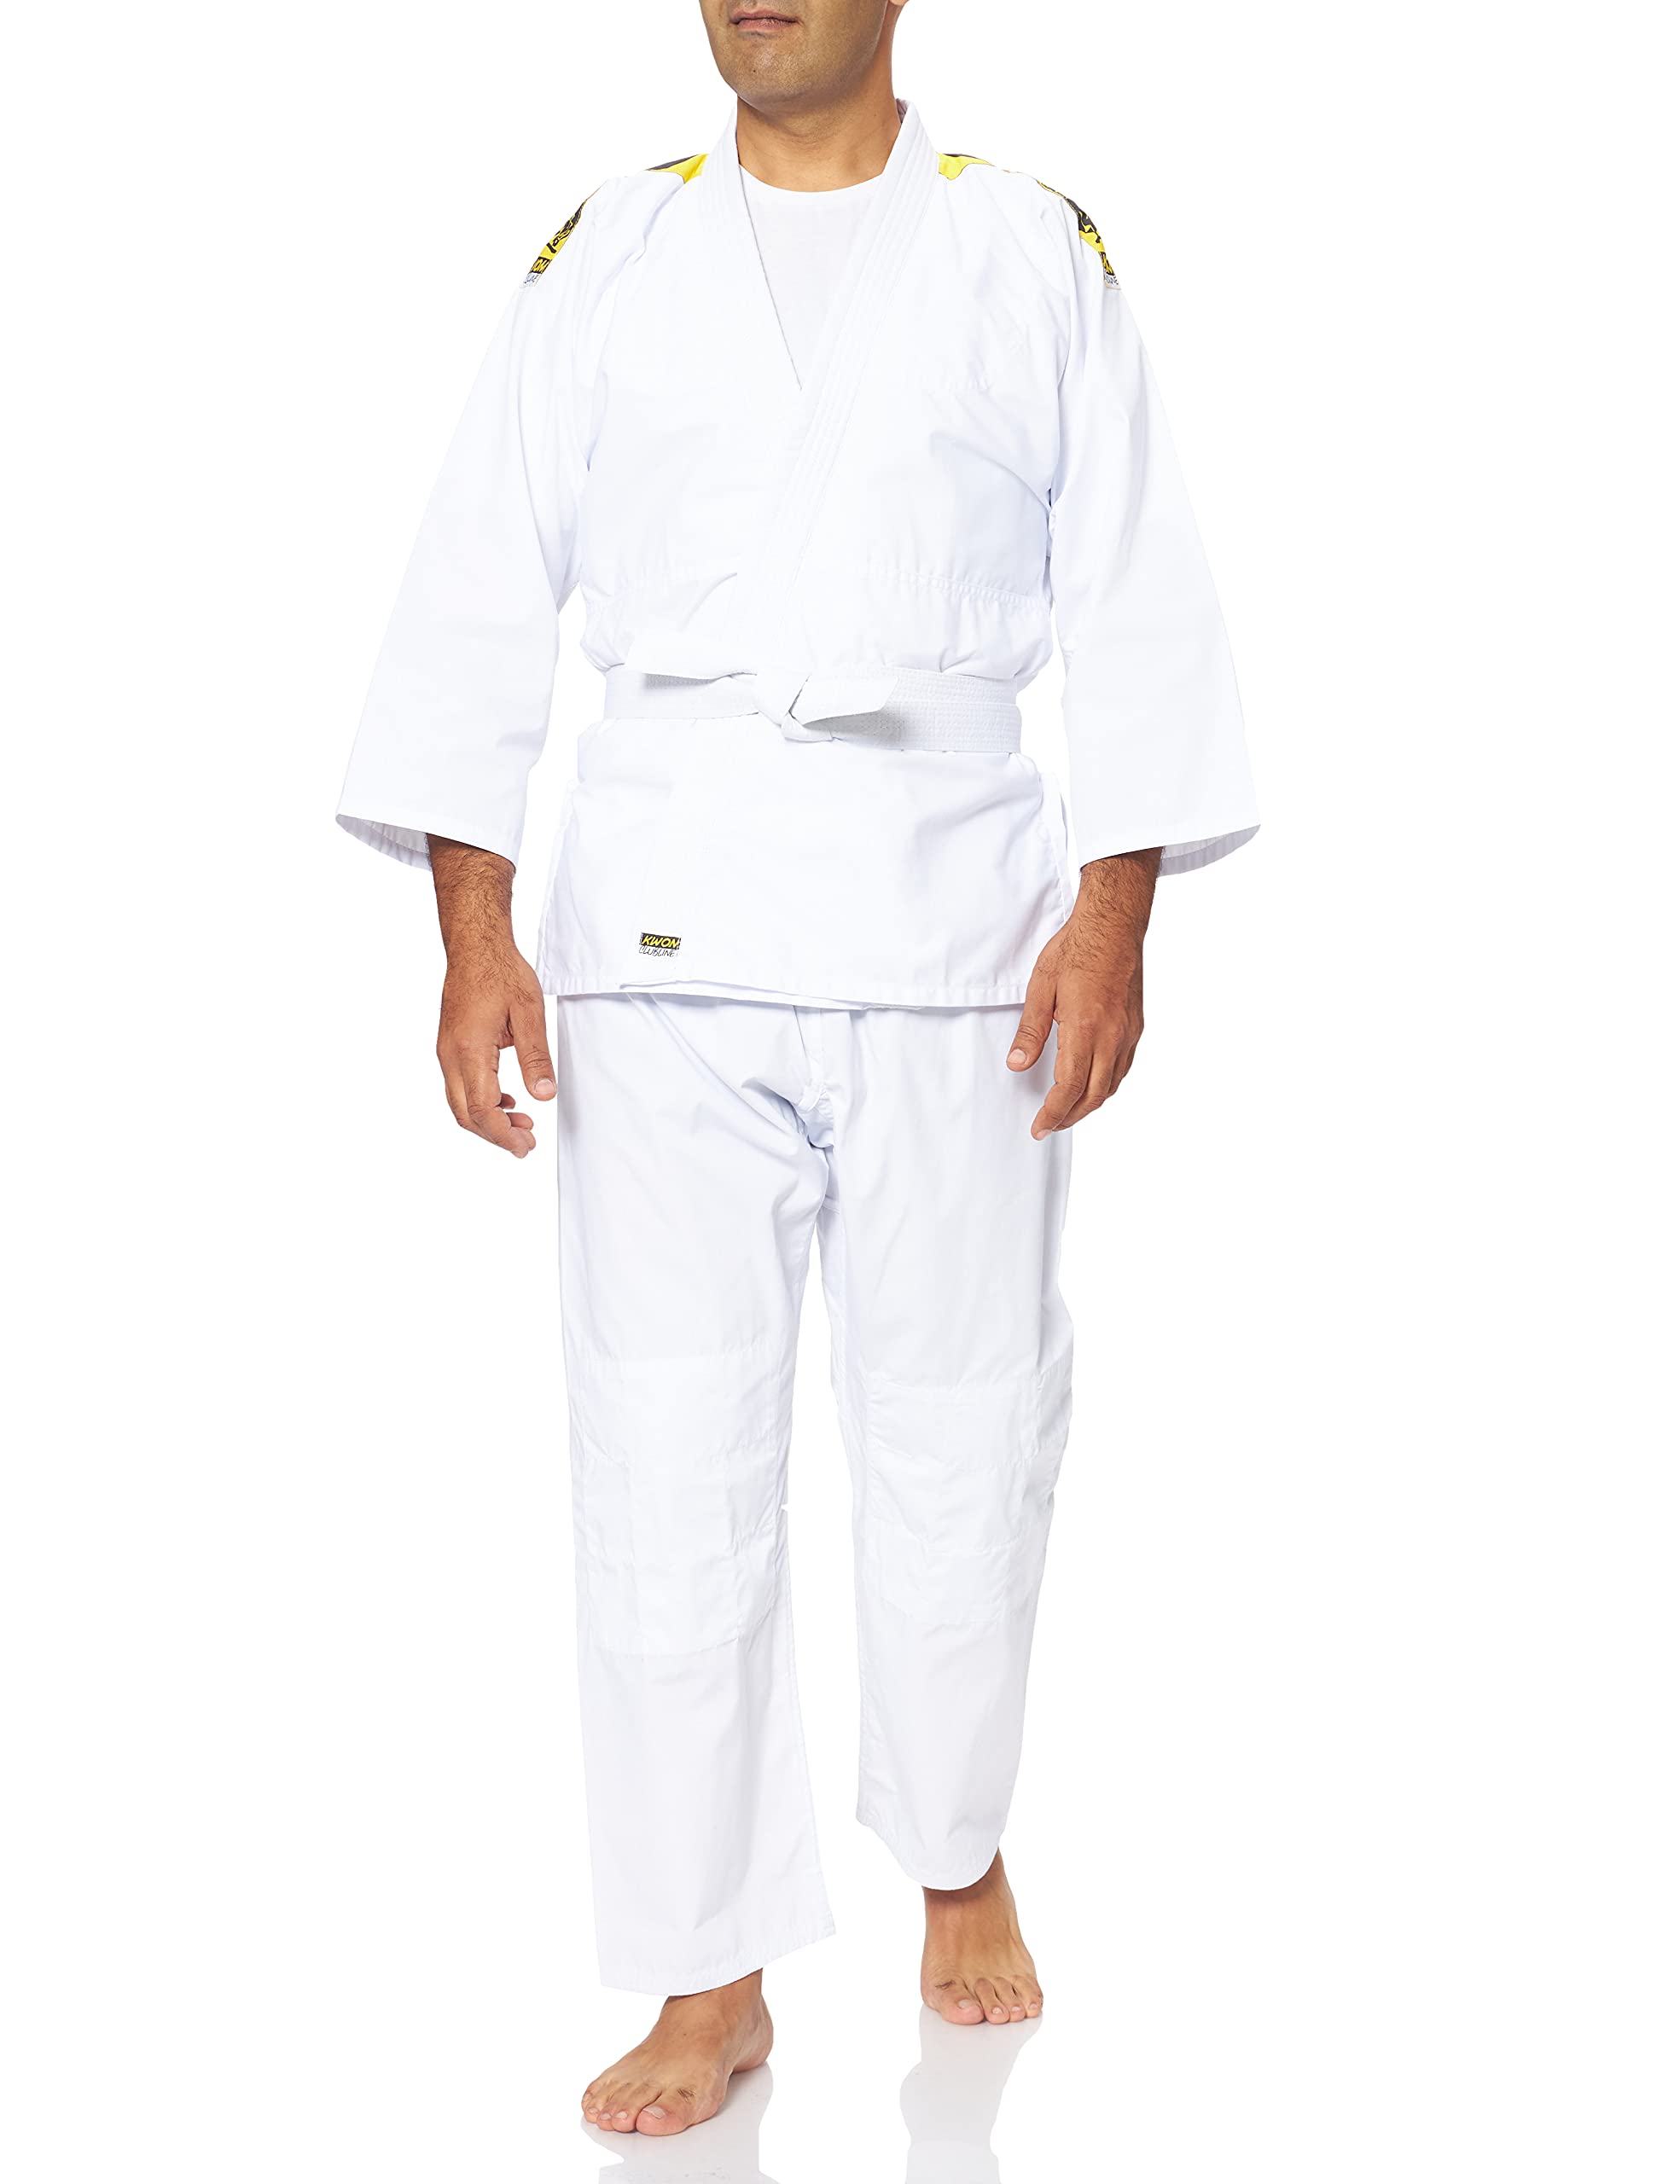 KWON Kampfsportanzug Judo Junior, weiß, 160 cm, 551302160